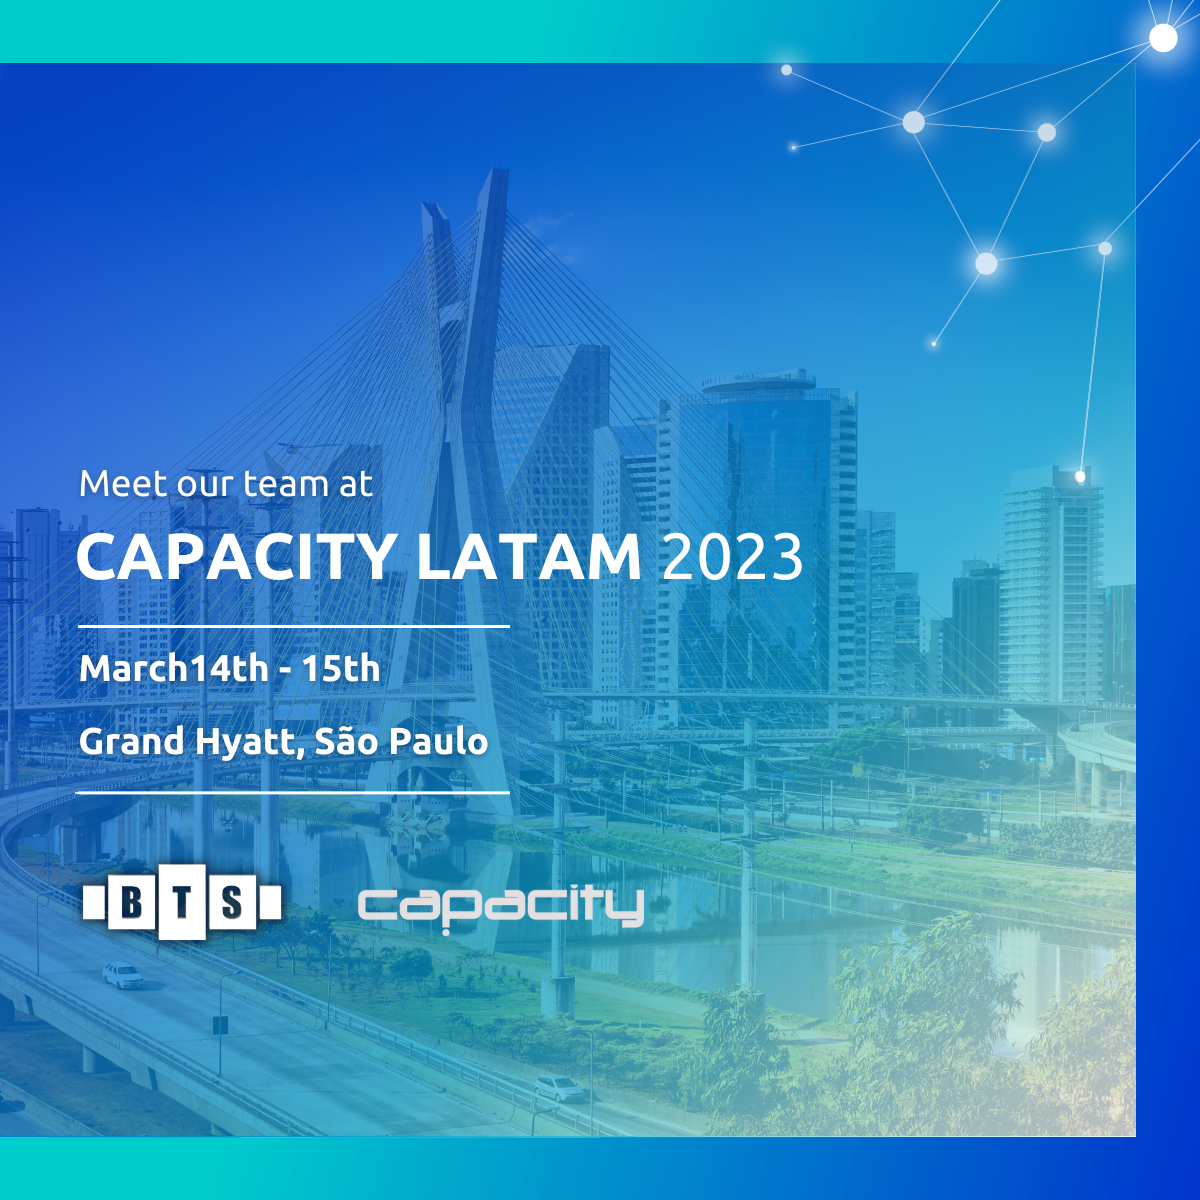 Information about Capacity Lattam 2023